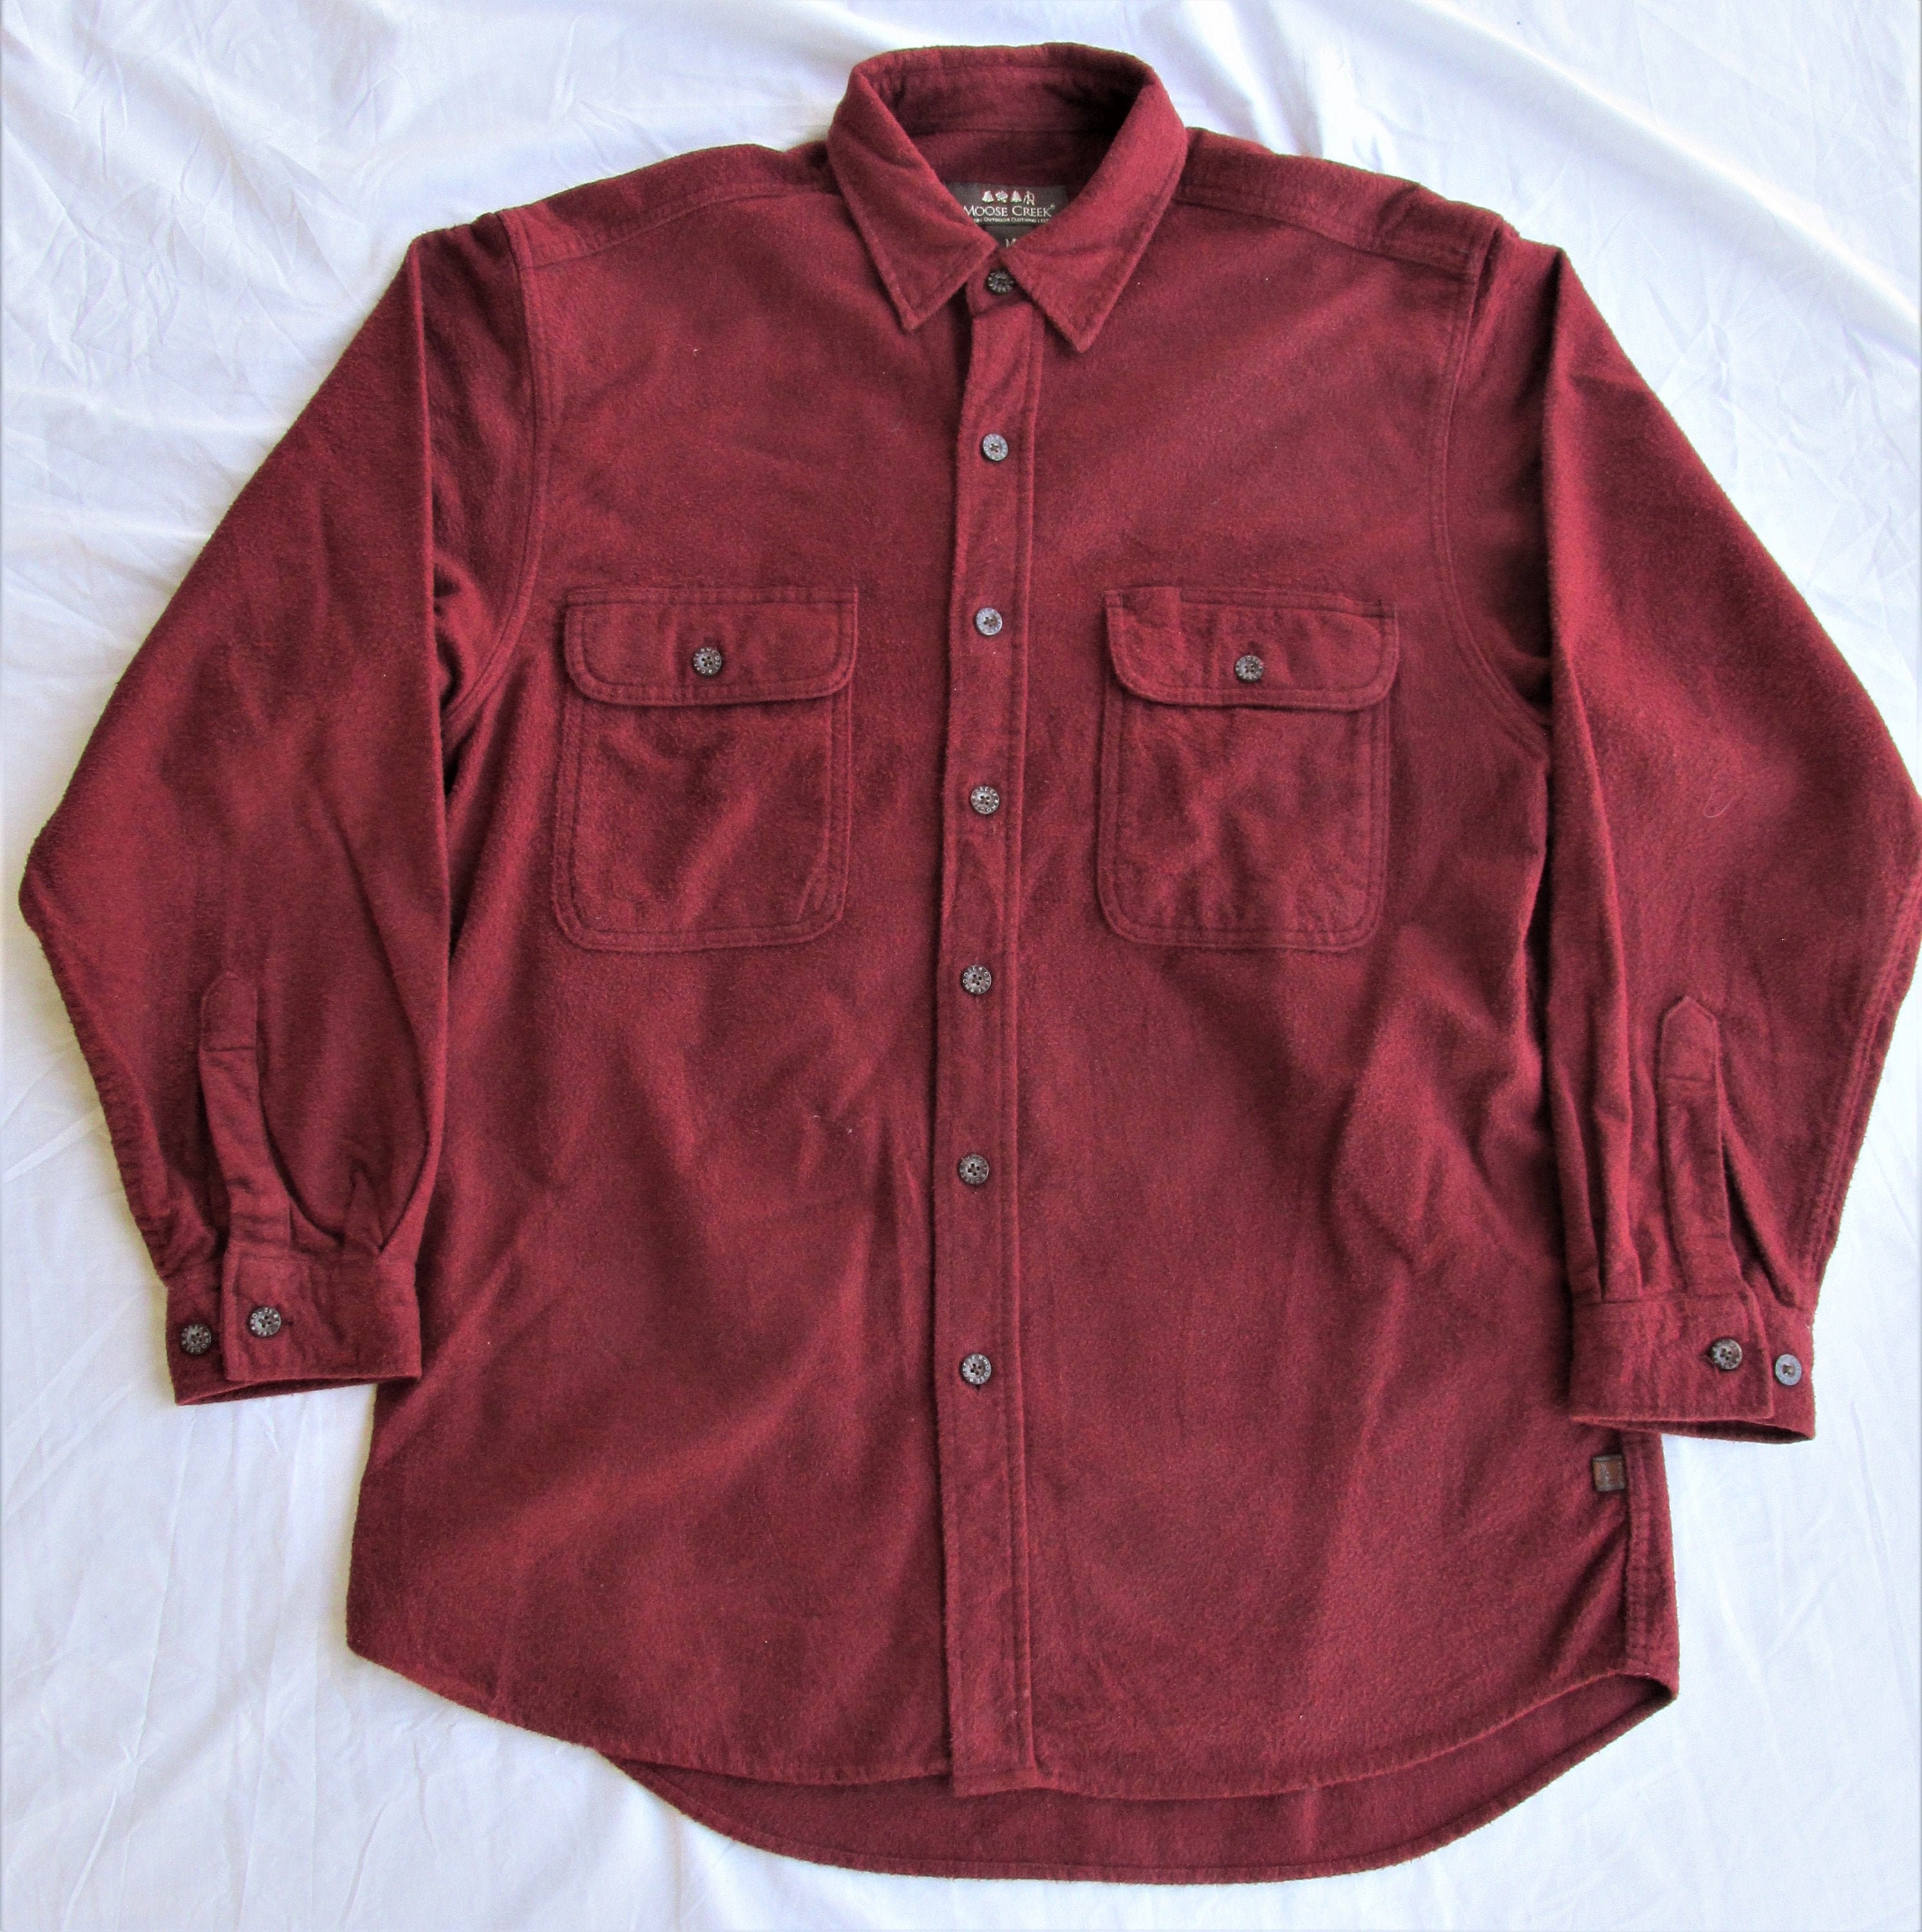 Moose Creek Men's Cotton Chamois Shirt Size Medium | Etsy